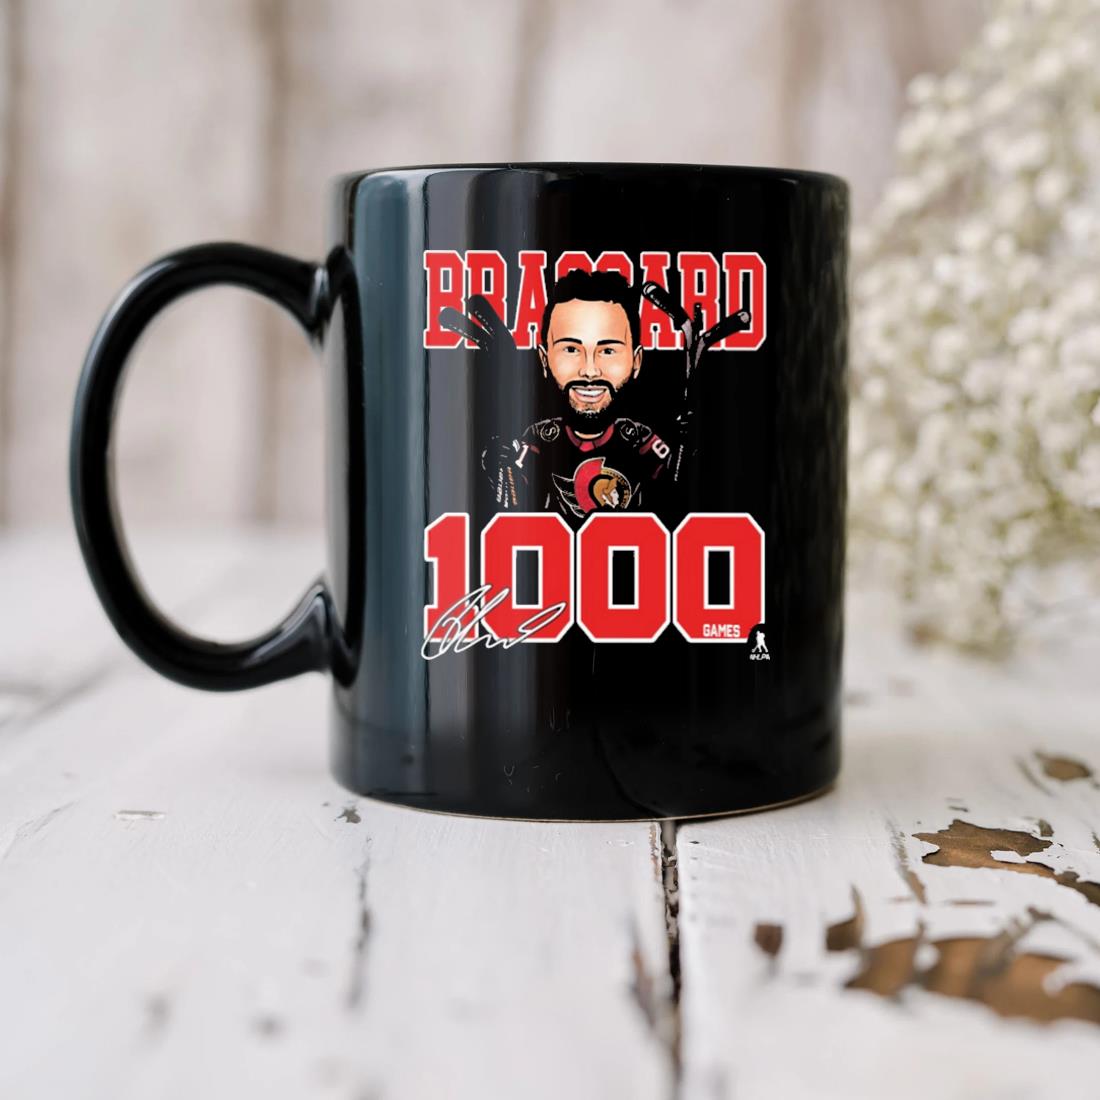 Derick Brassard 1000 Games Signature Mug